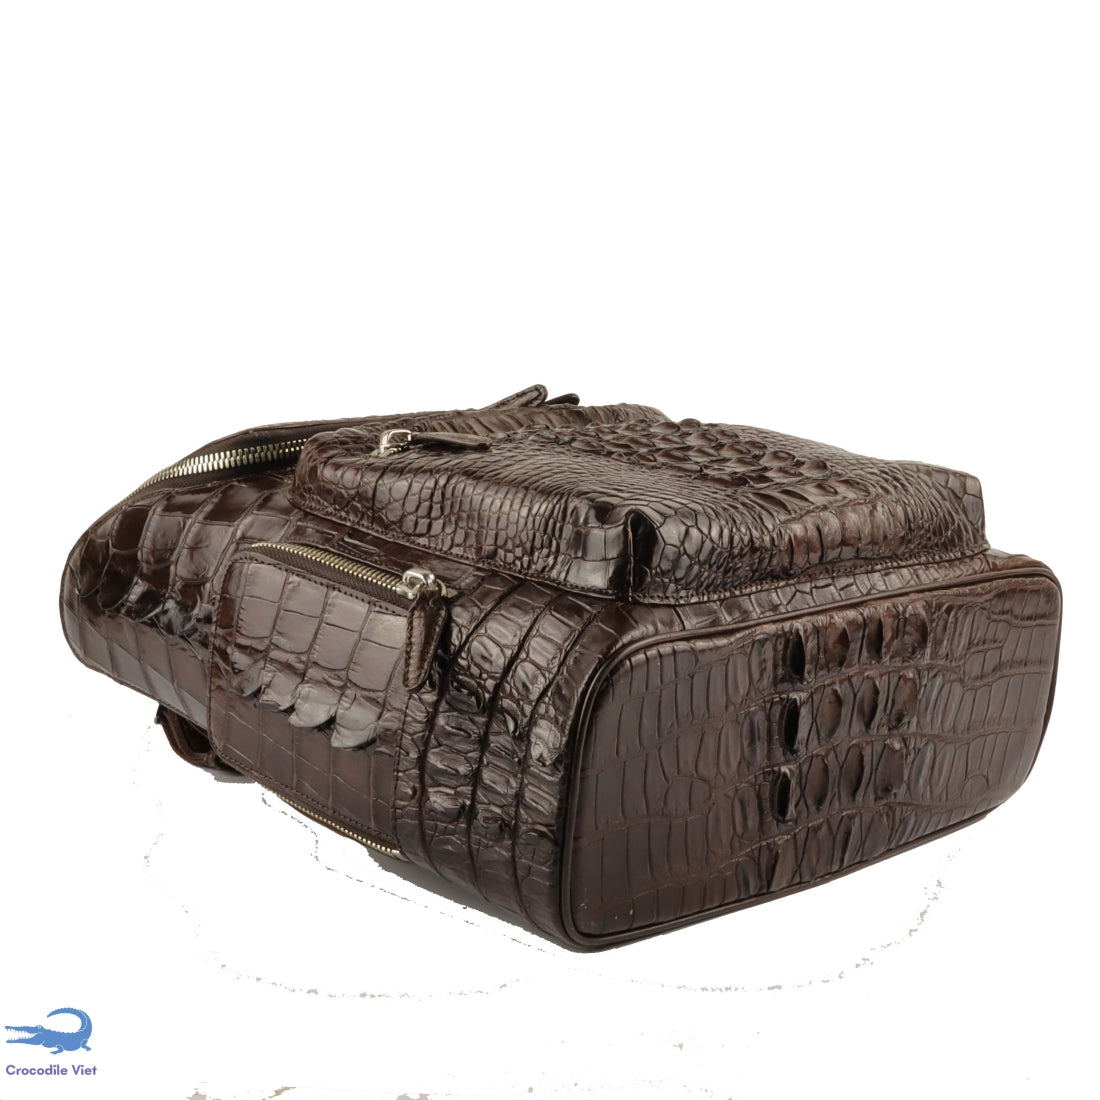 Men's Genuine Crocodile Skin Backpack, Casual Travel Bag Extra